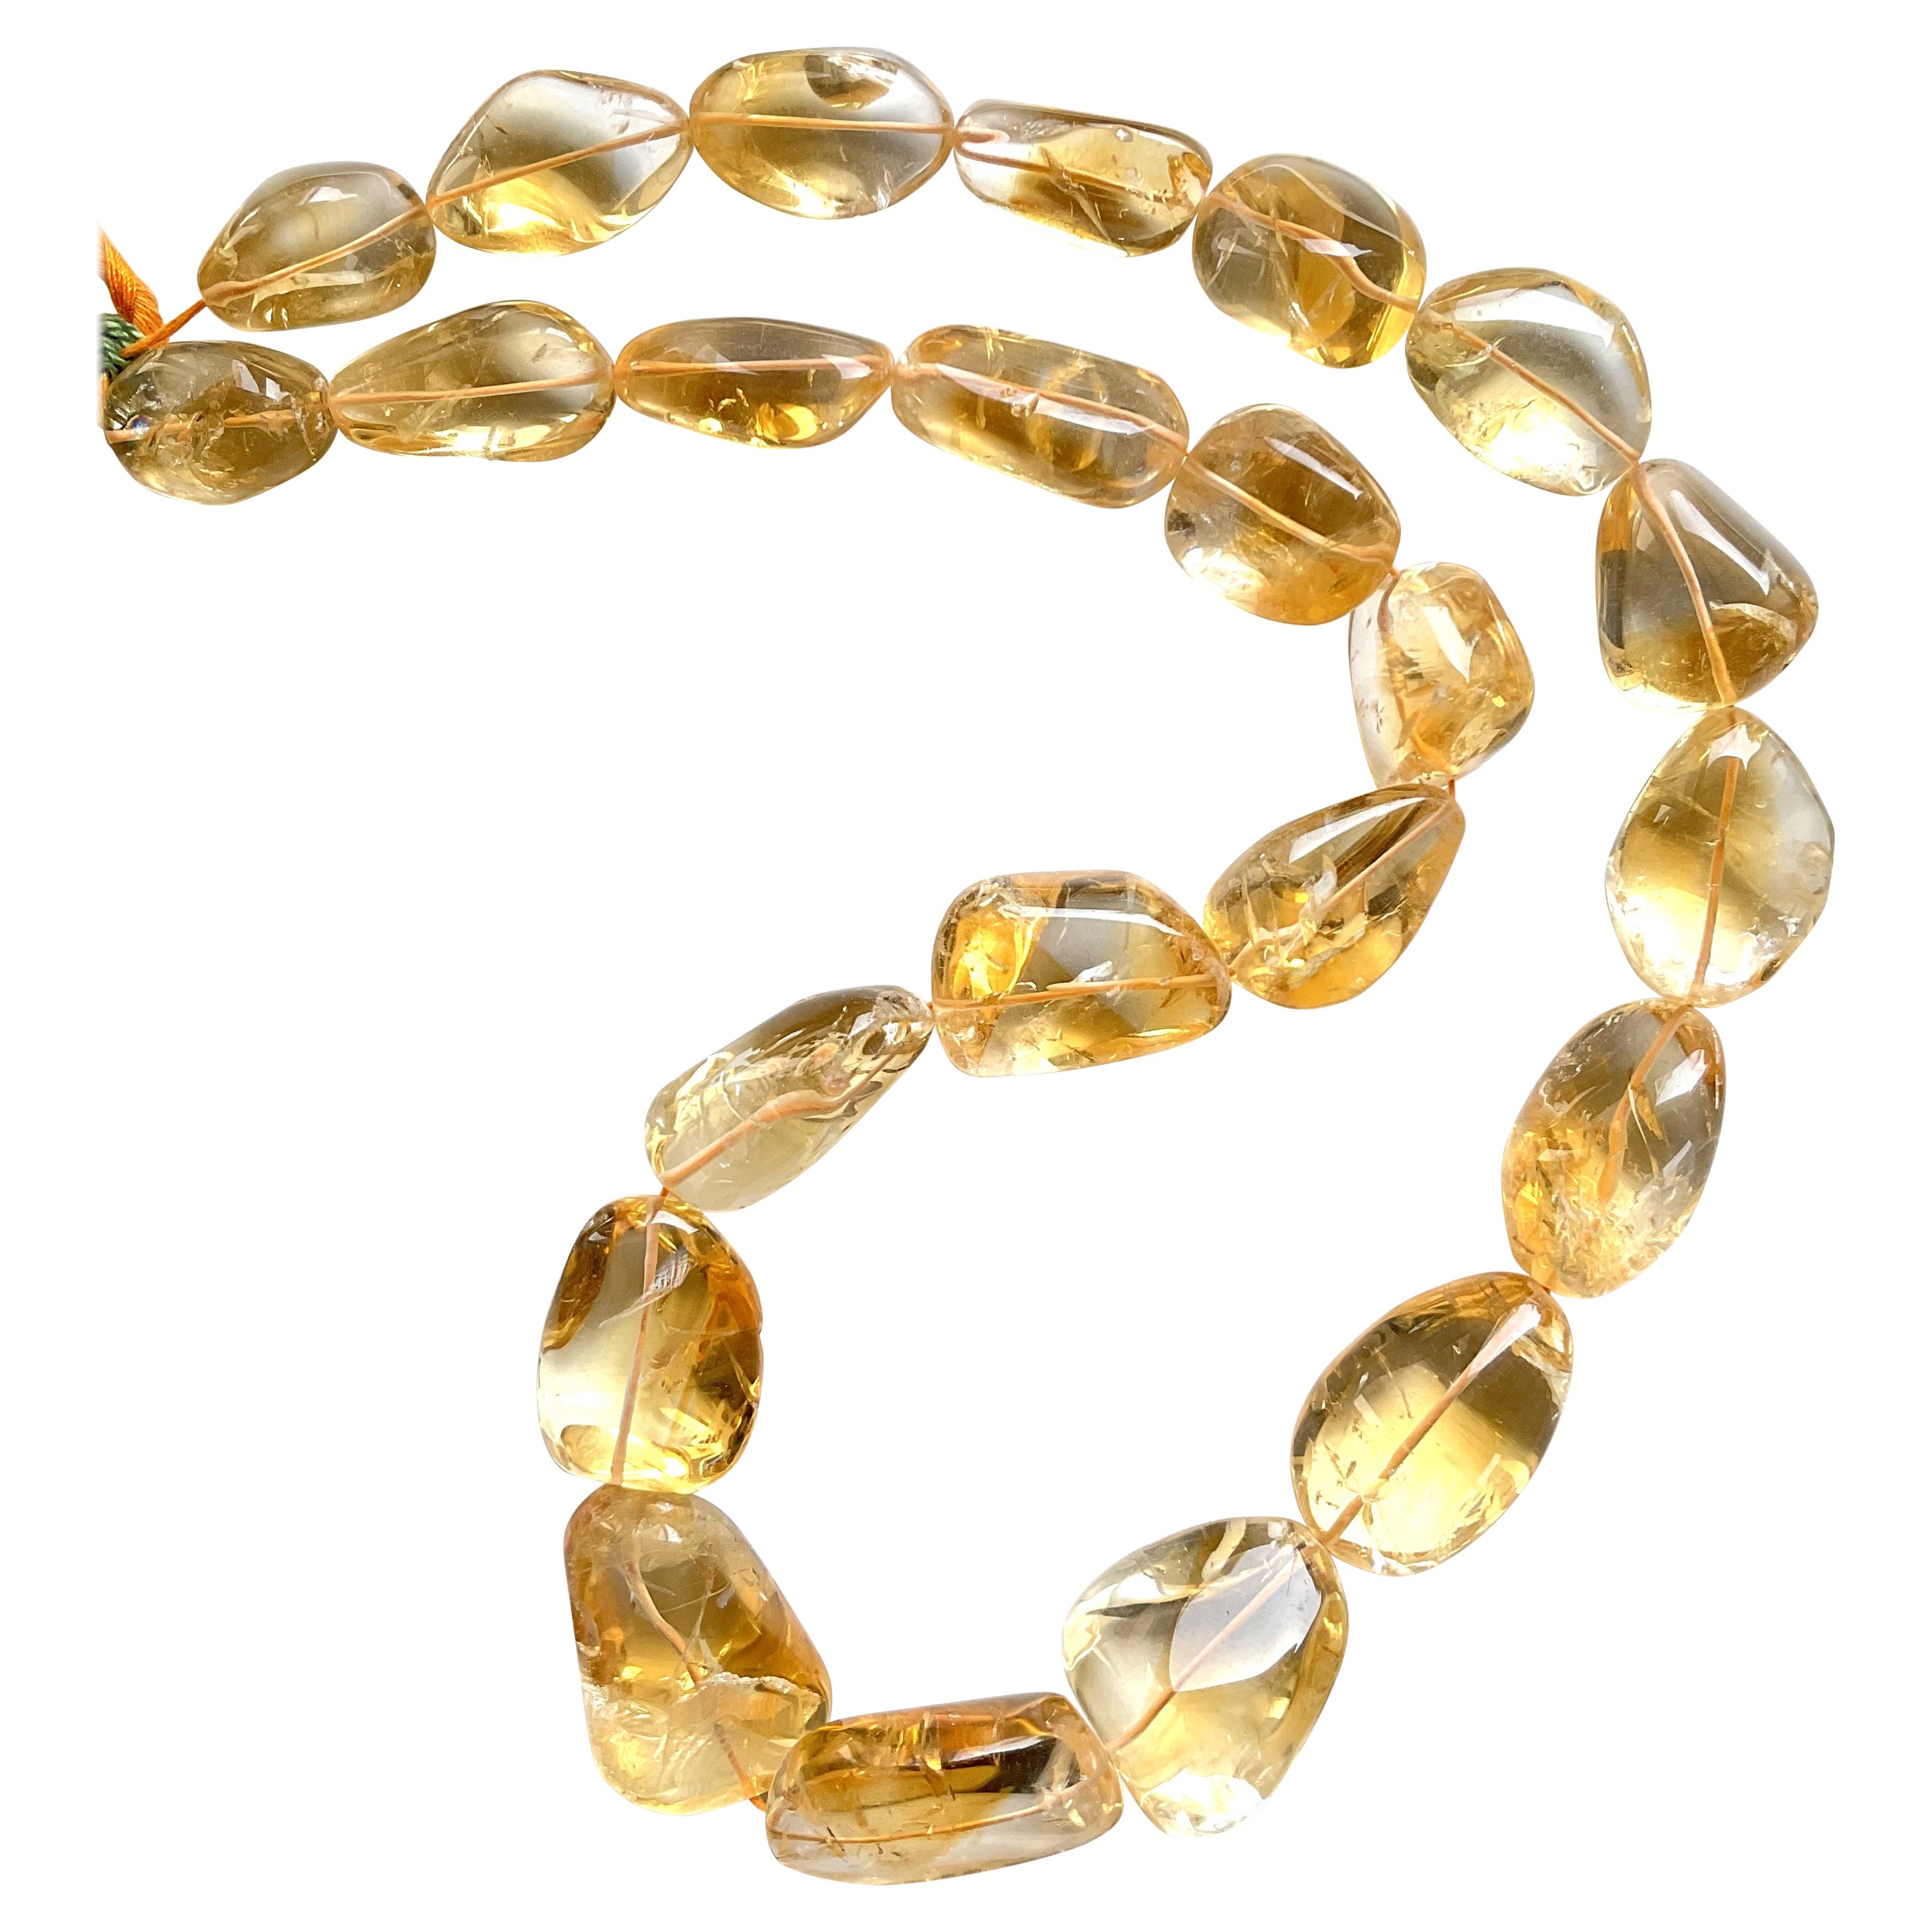 1157.00 carats big size citrine plain tumbled natural gemstone necklace For Sale